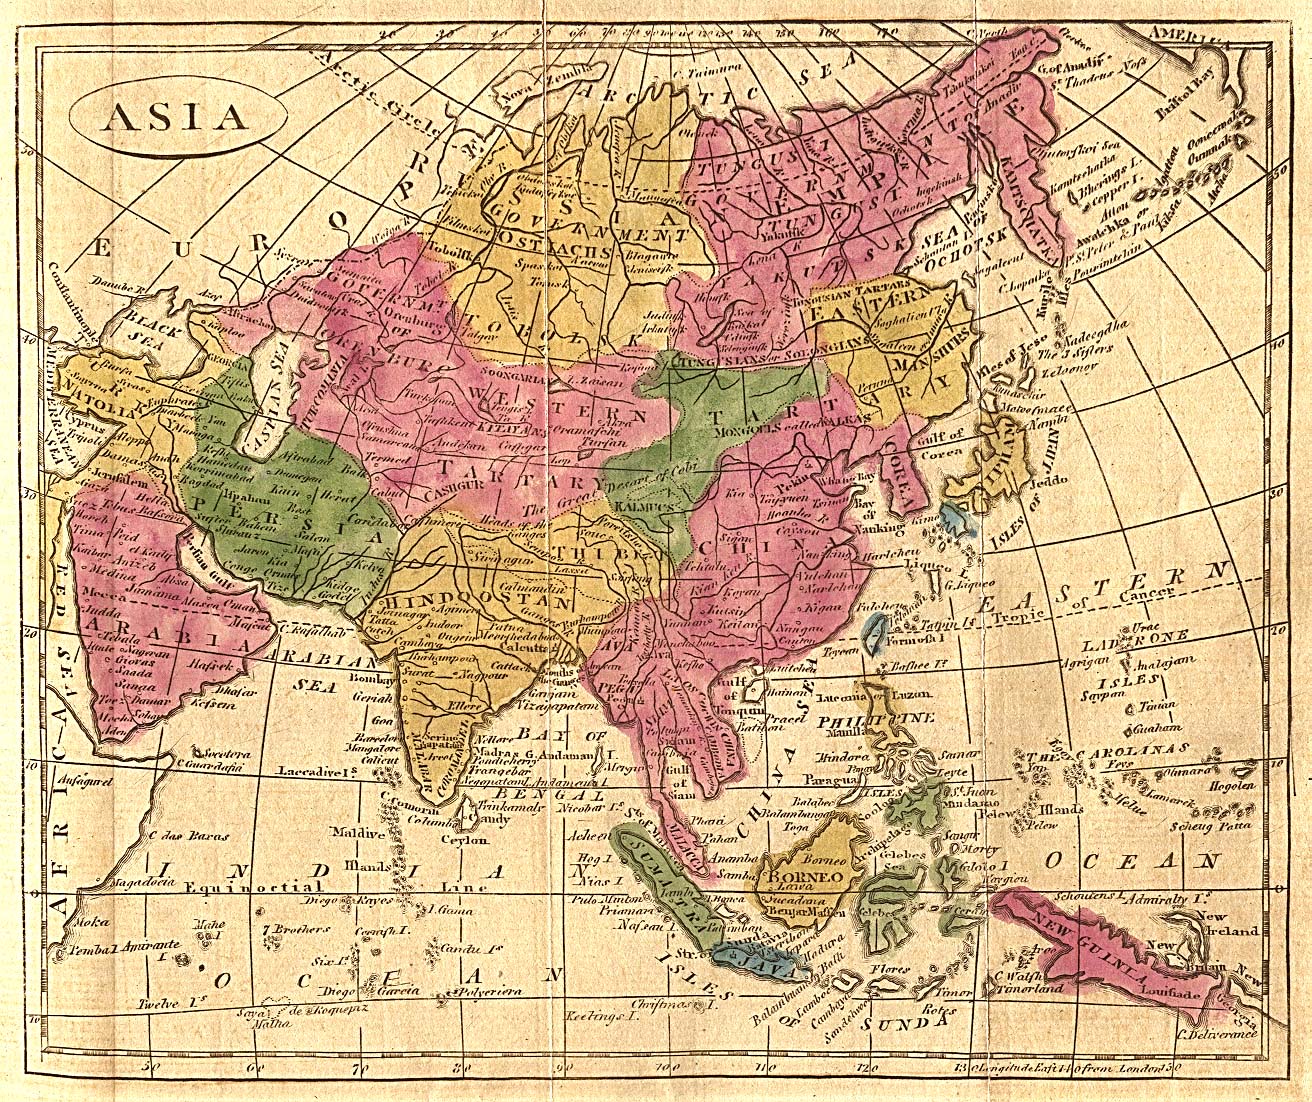 http://www.lib.utexas.edu/maps/historical/asia_1808.jpg